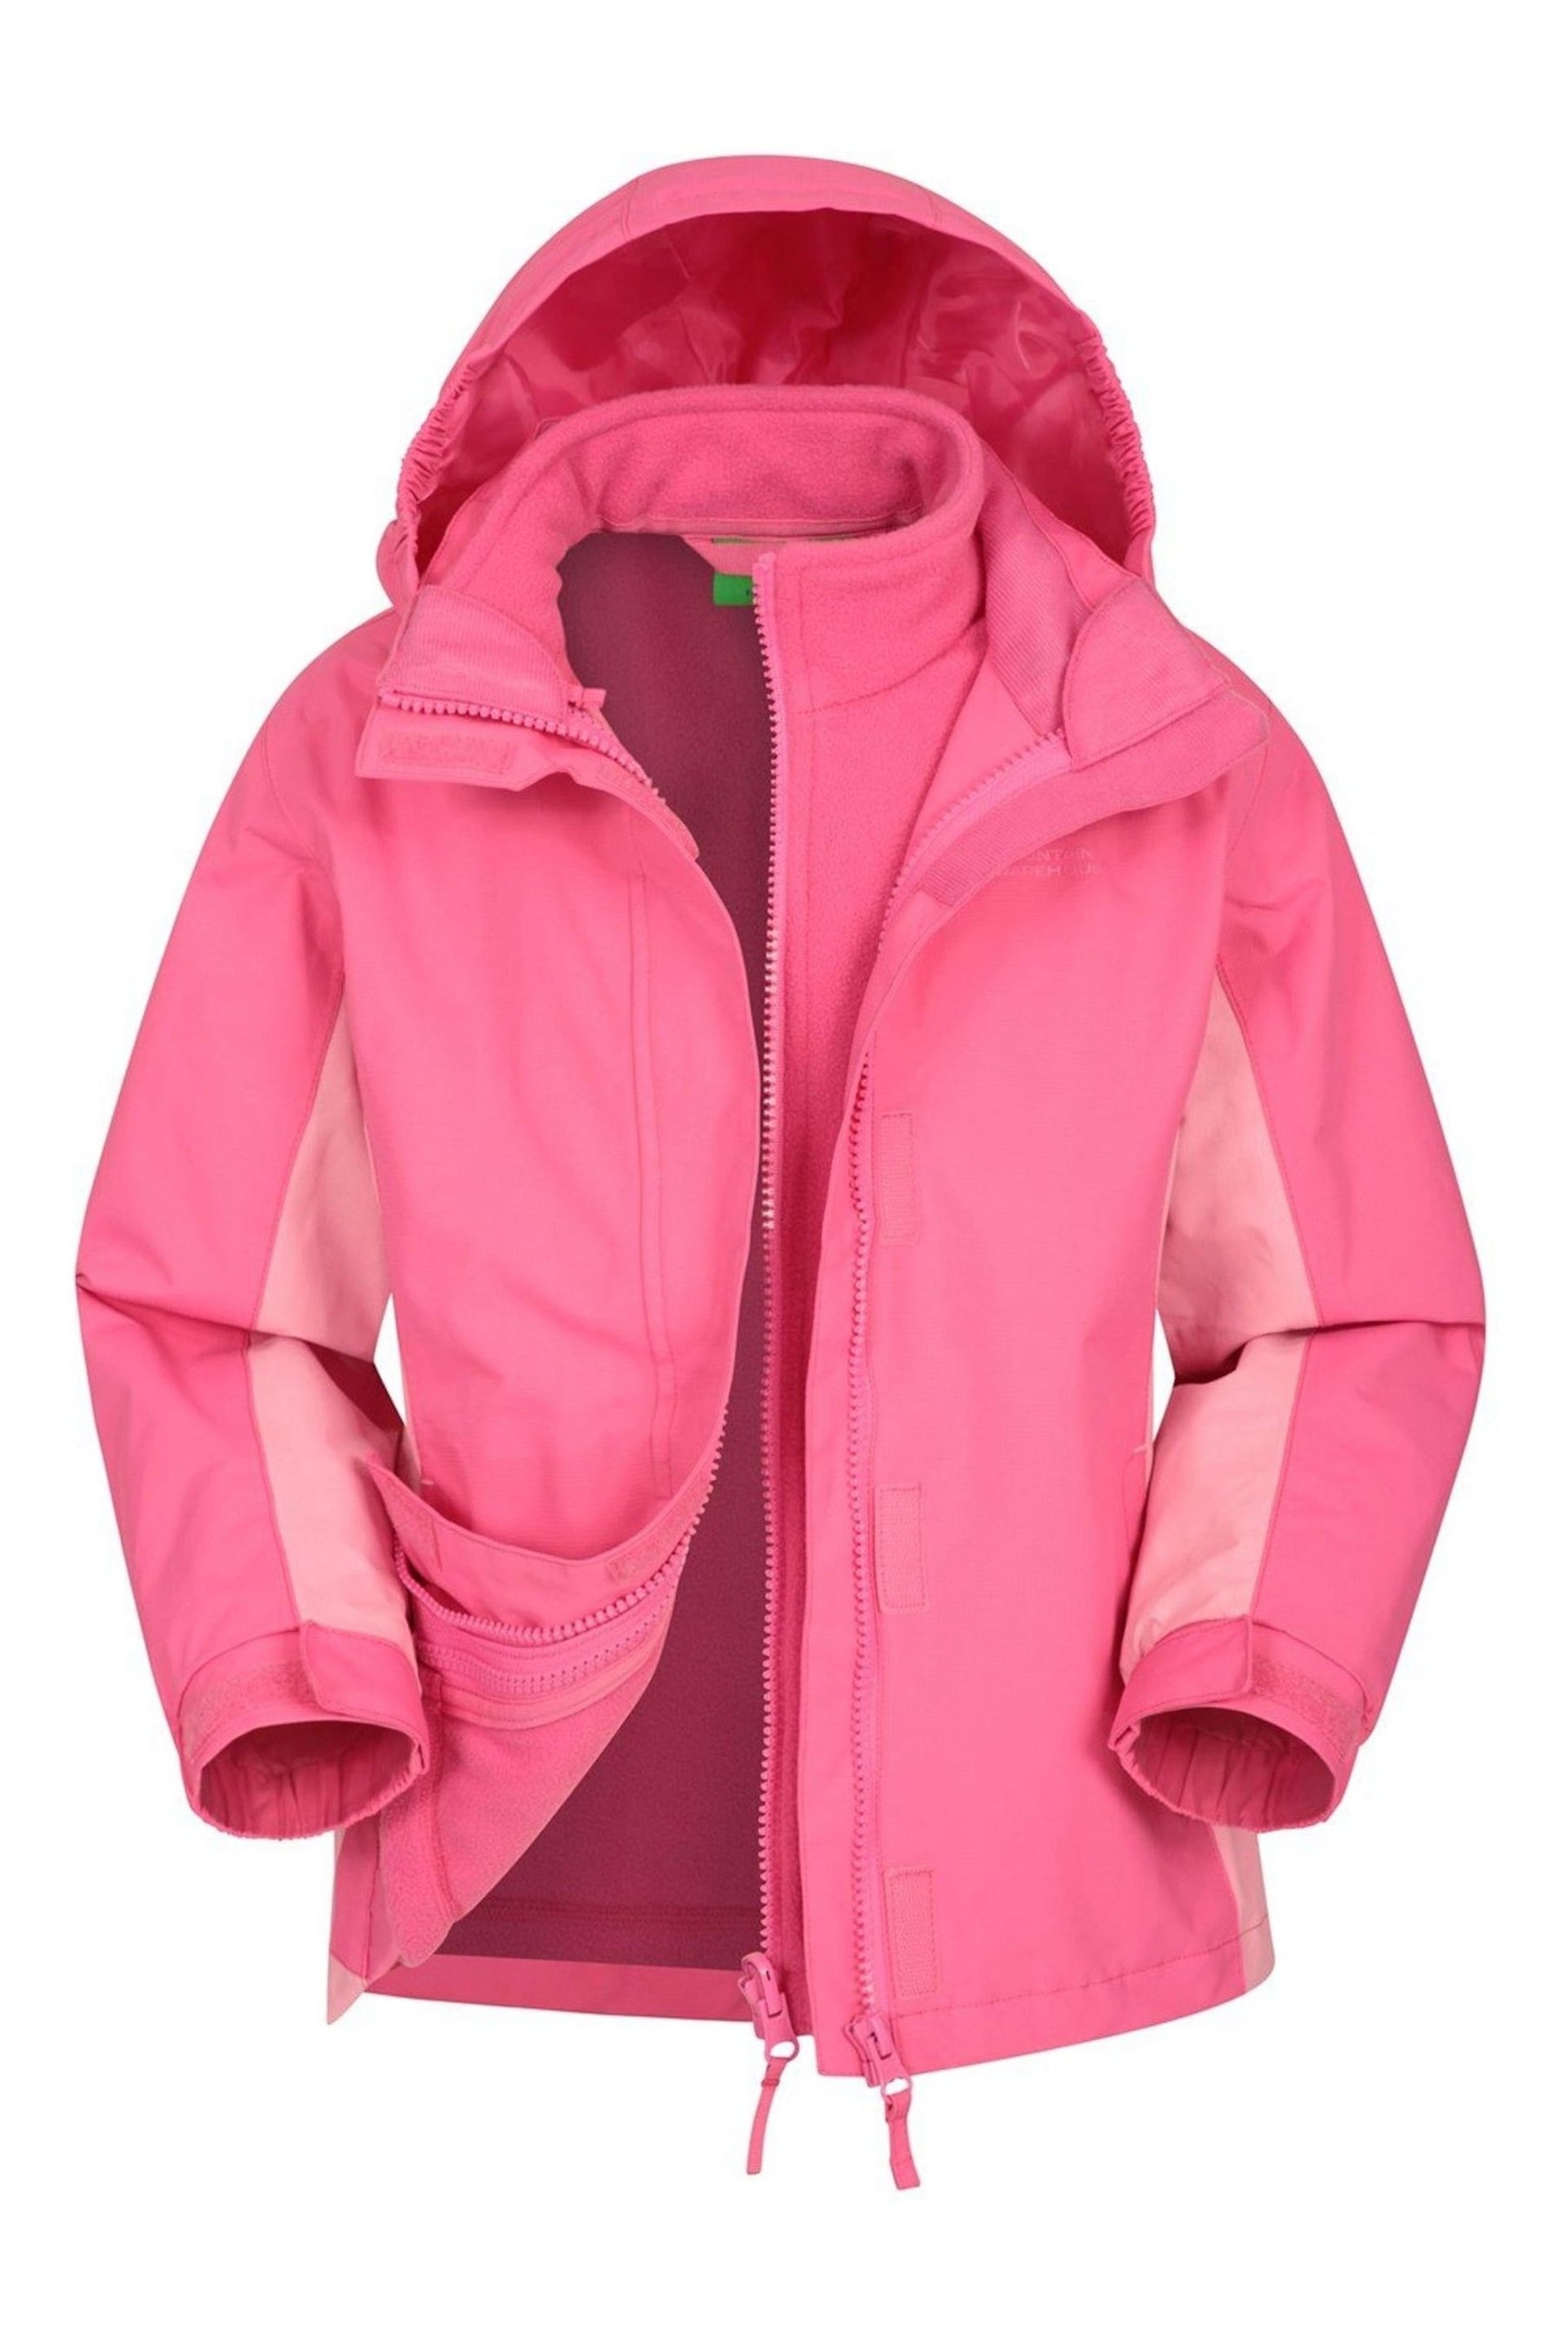 Mountain Warehouse Pink Lightning 3 in 1 Waterproof Jacket - Image 1 of 4